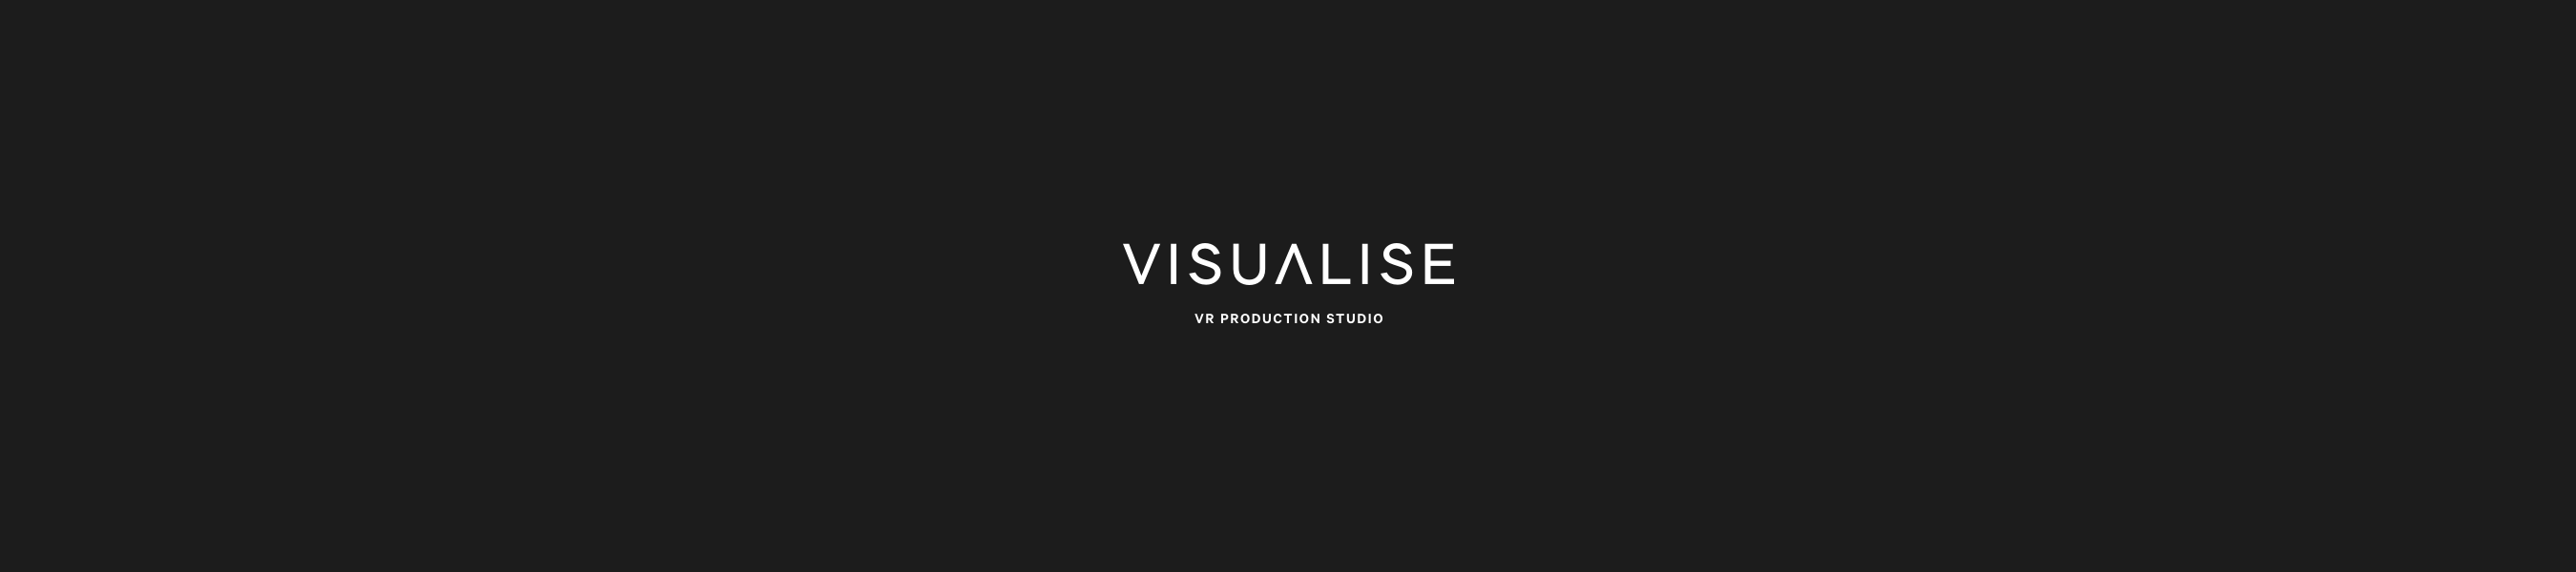 Watching VR Visualise